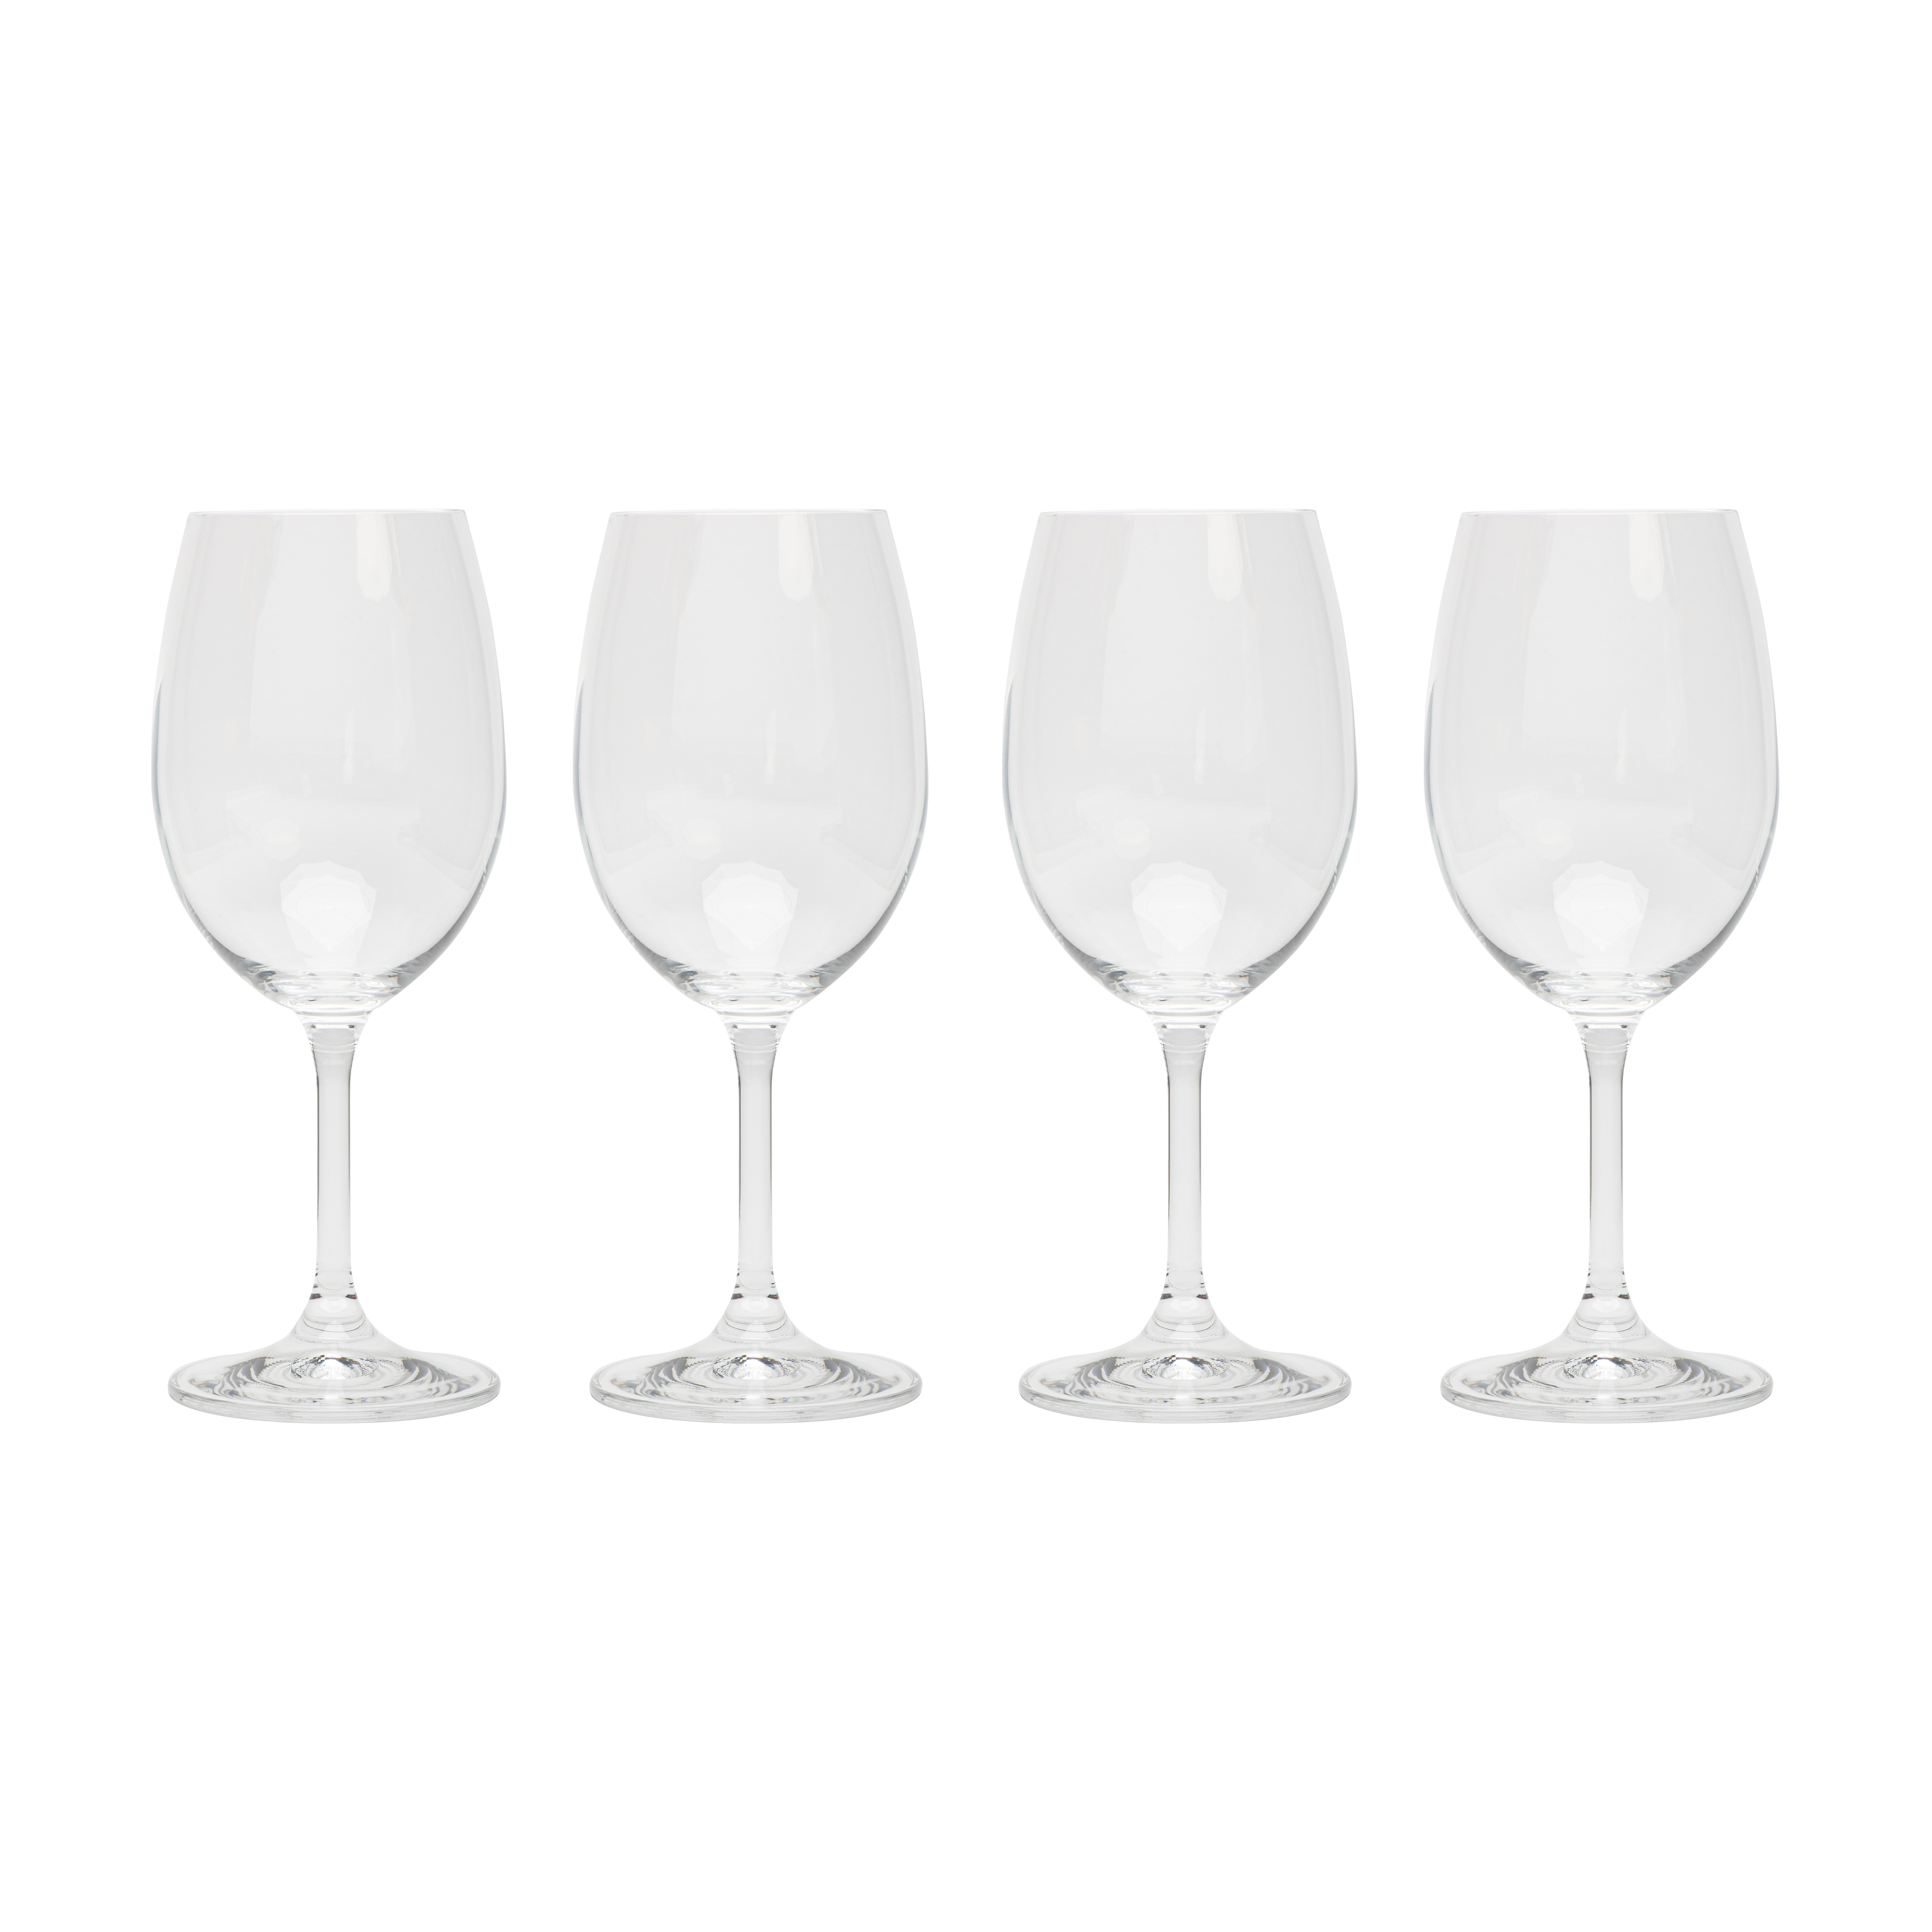 Everyday Lead-Free Crystal Wine Glasses